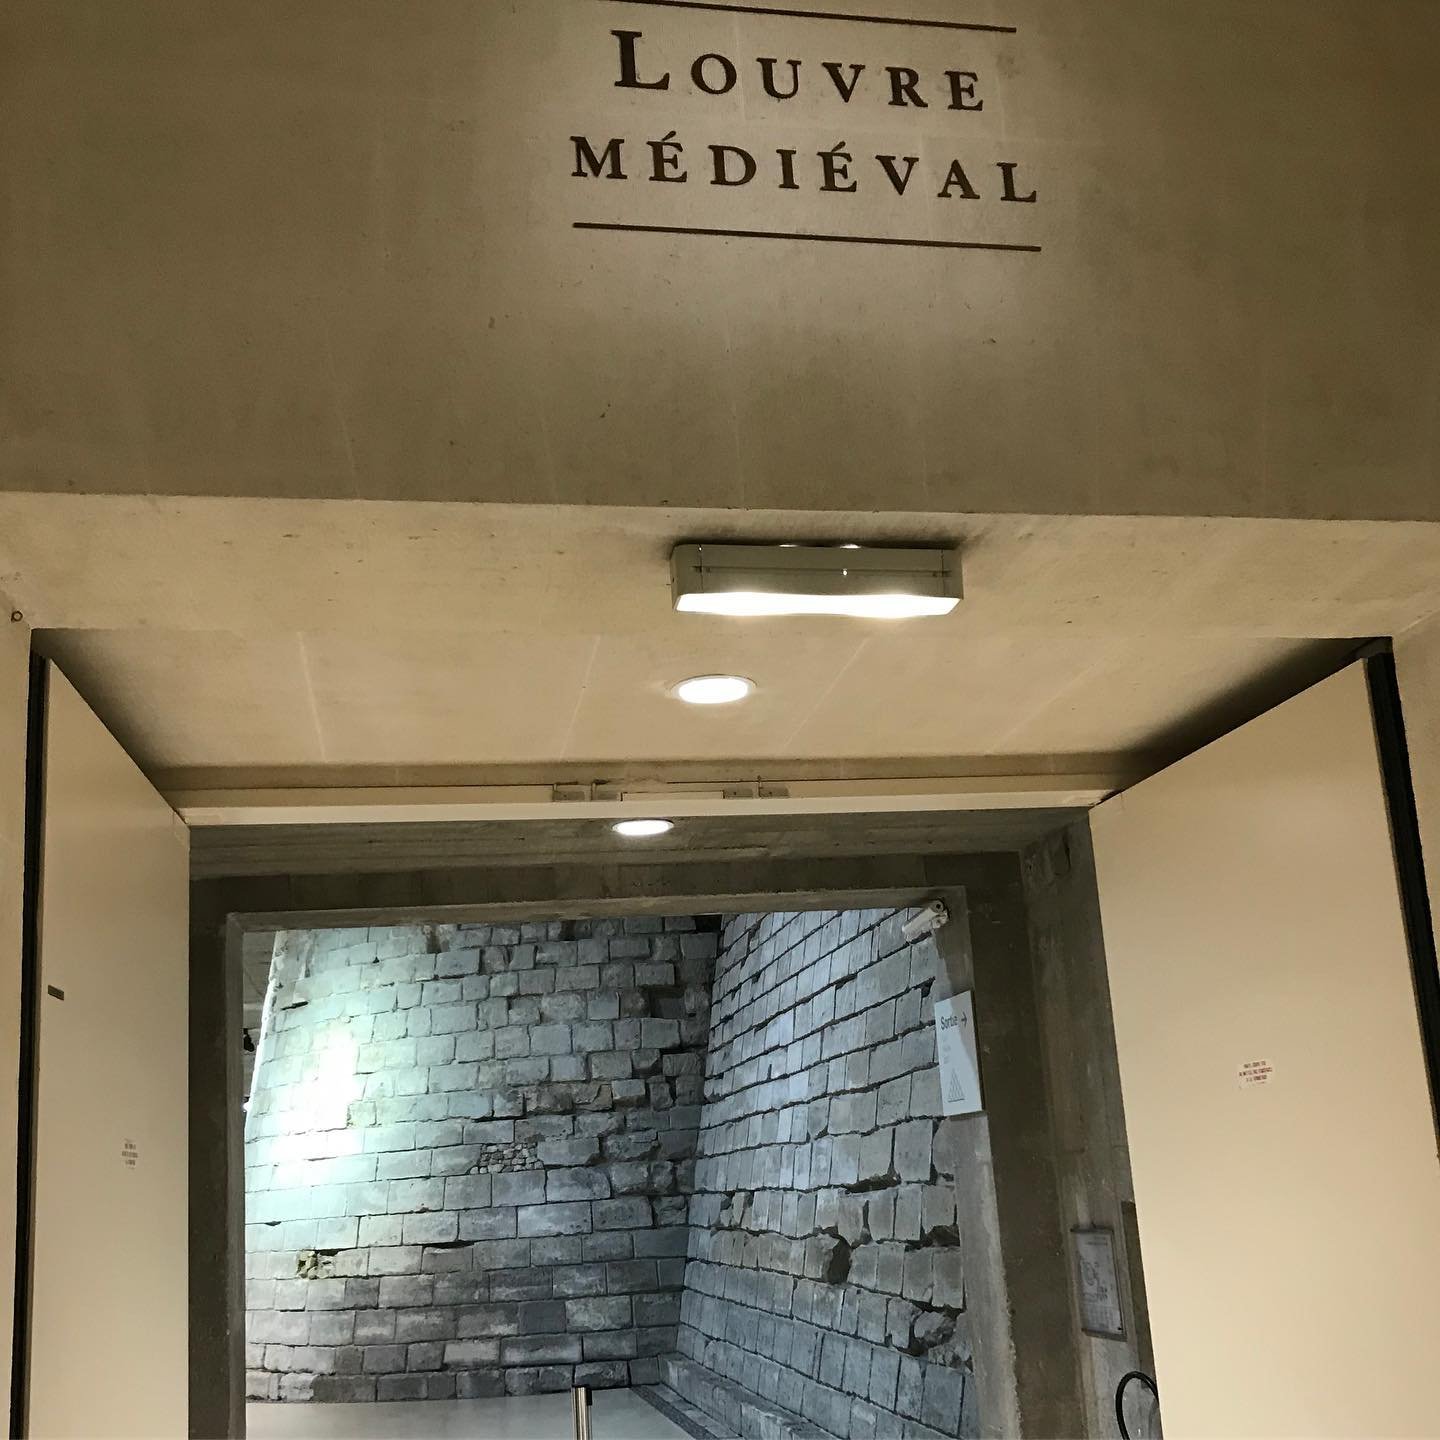 Louvre-Medieval-Entrance.jpg